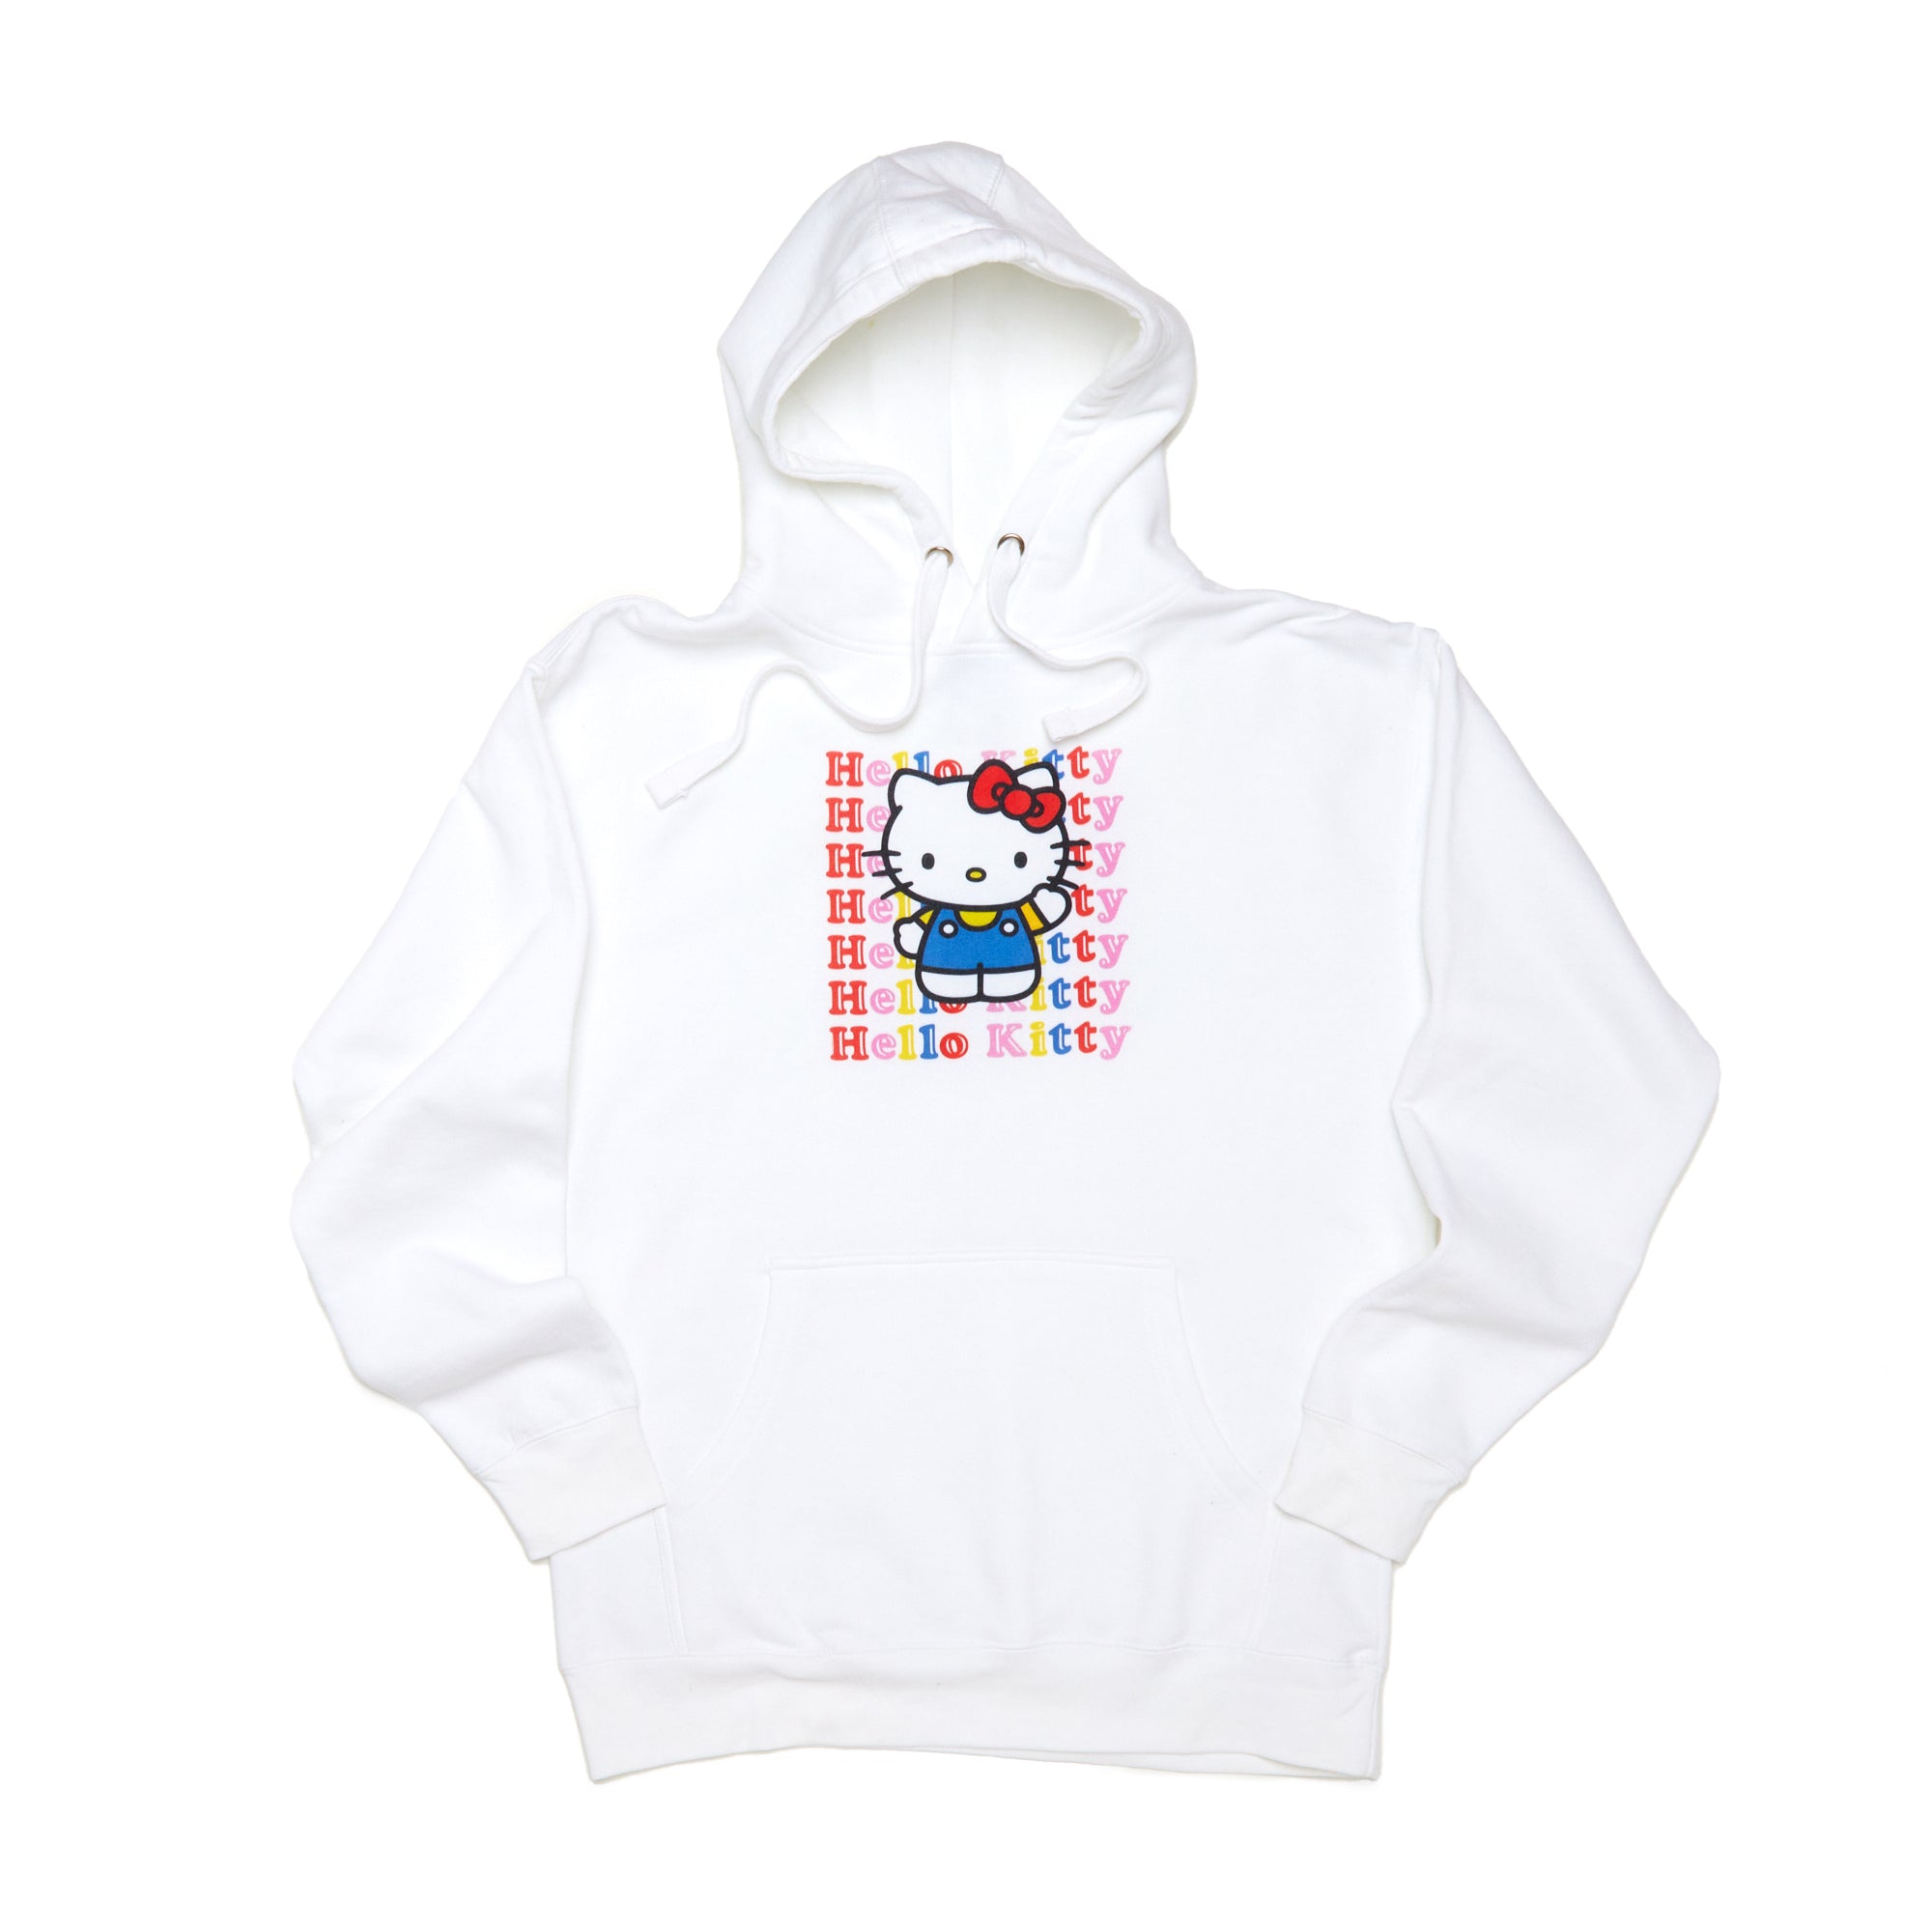 Sanrio Hello Kitty Zip Up Jacket/Hoodie